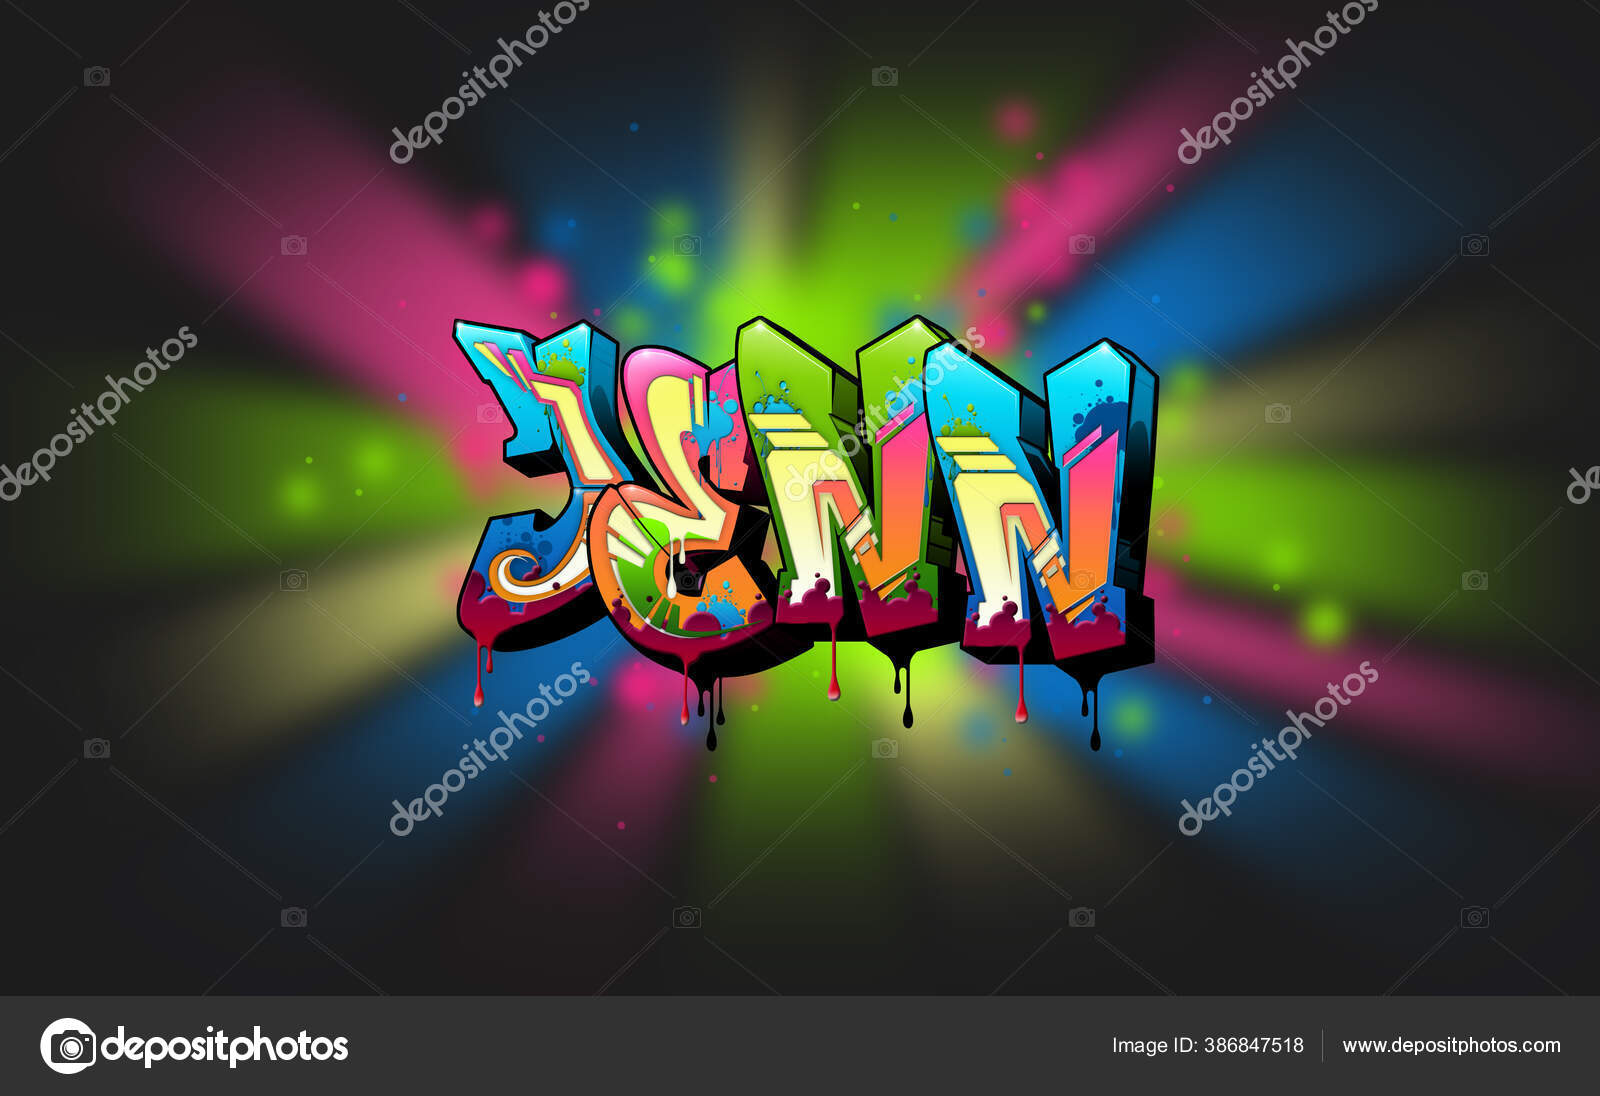 Jenn Cool Graffiti Name Illustration Inspired Graffiti Street Art Culture Stock Photo Image By C Mindgem